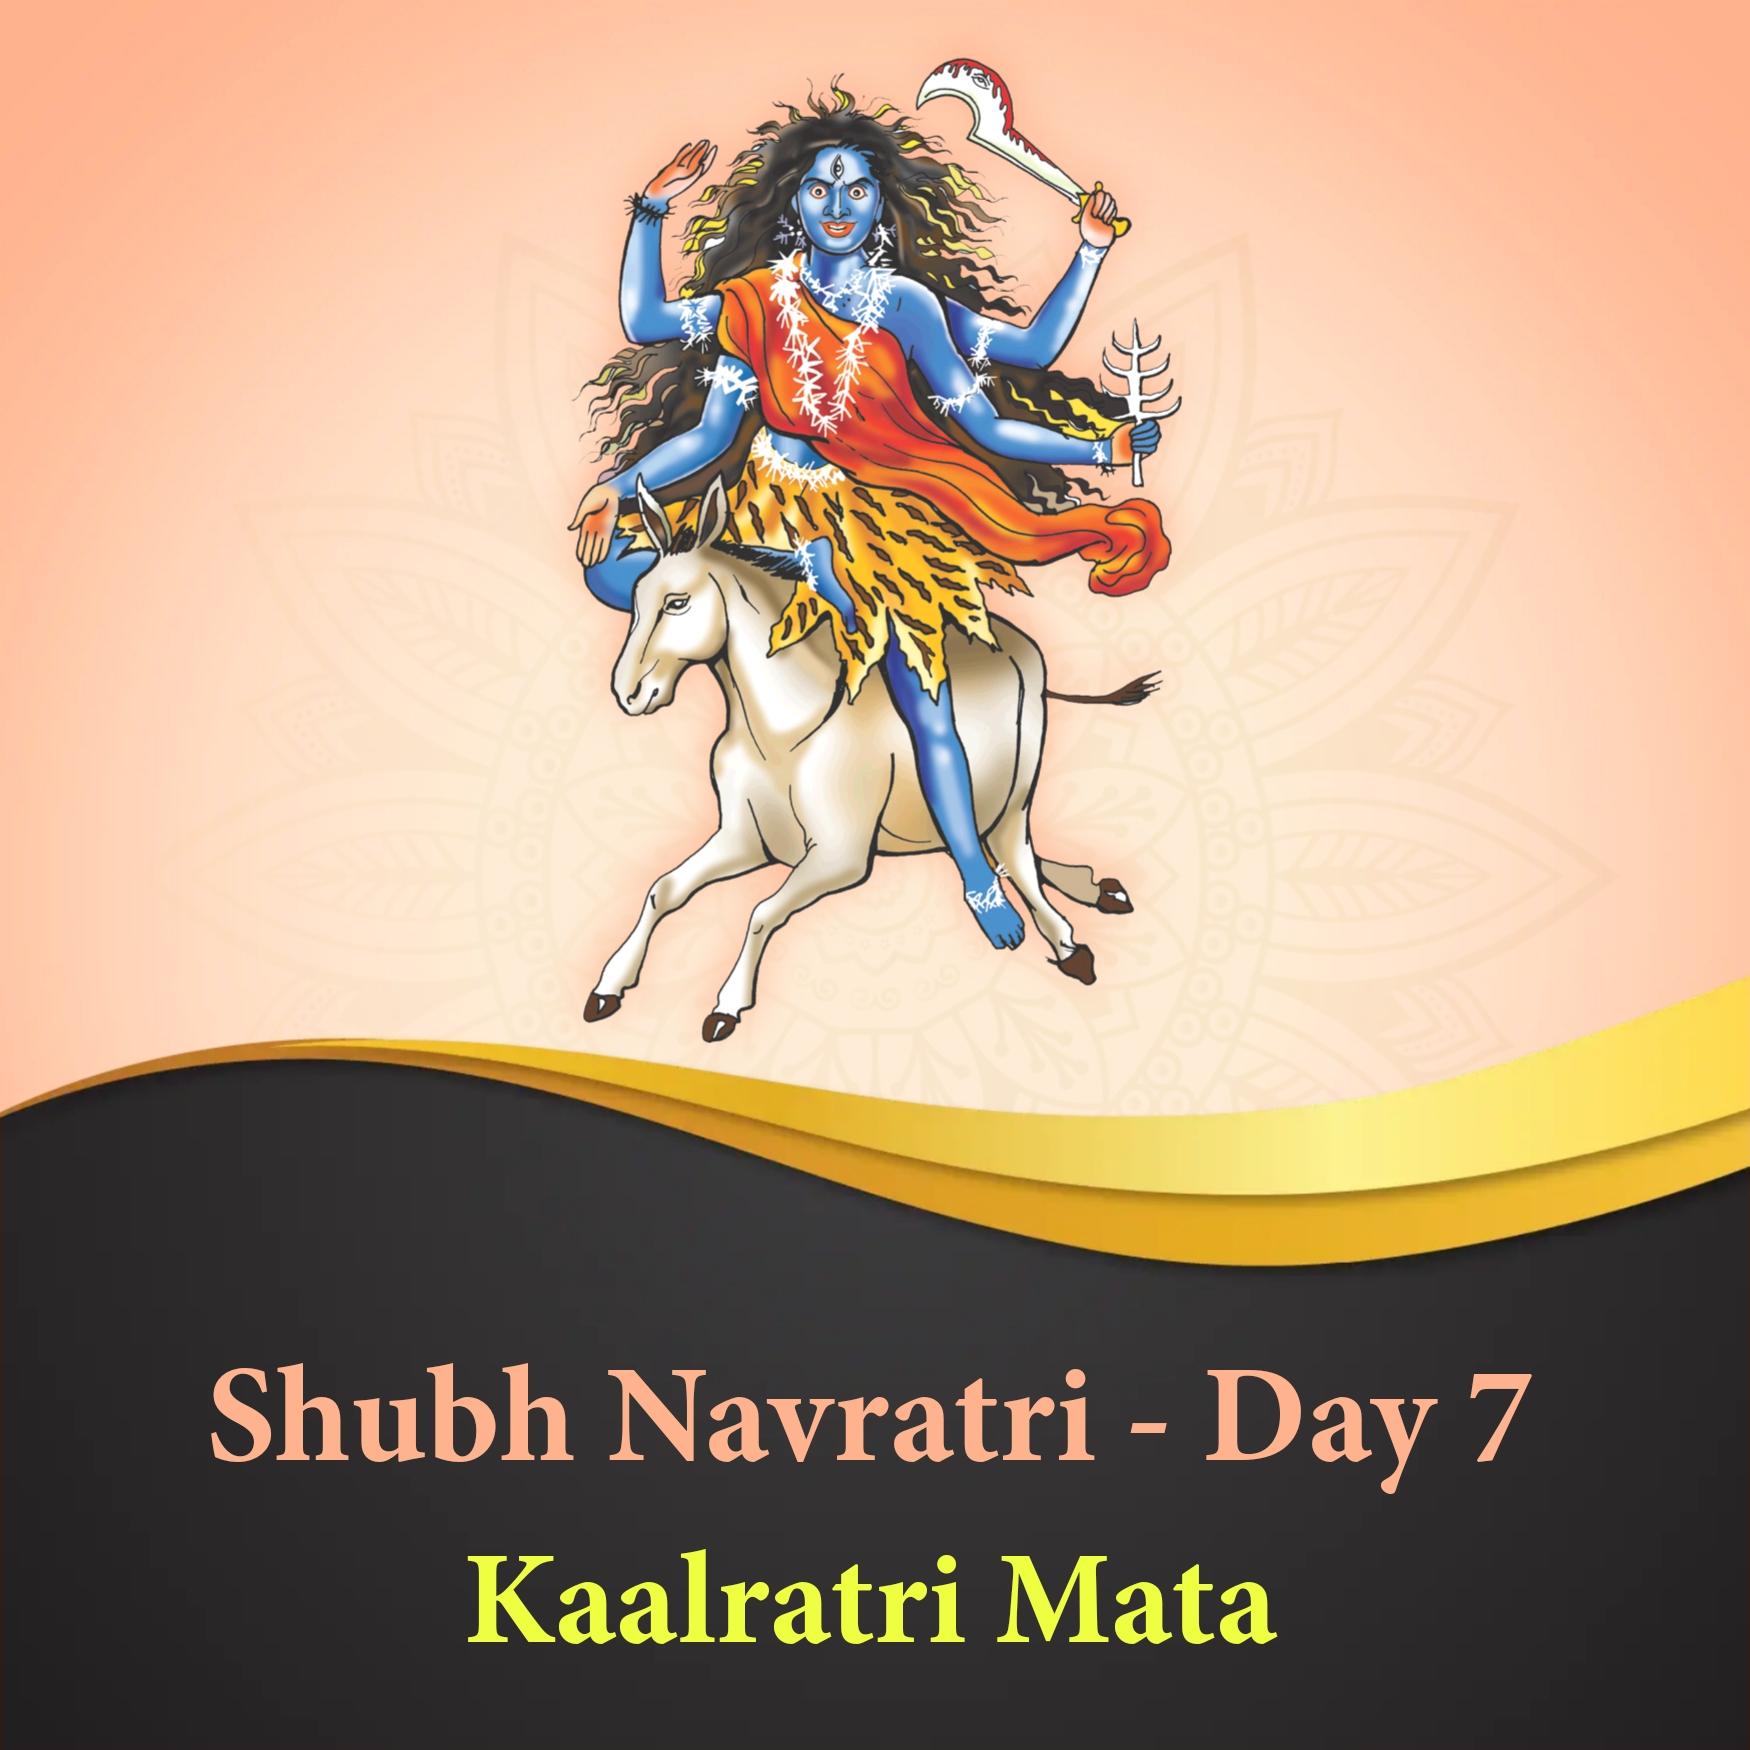 Shubh Navratri Day 7 Kaalratri Mata Images